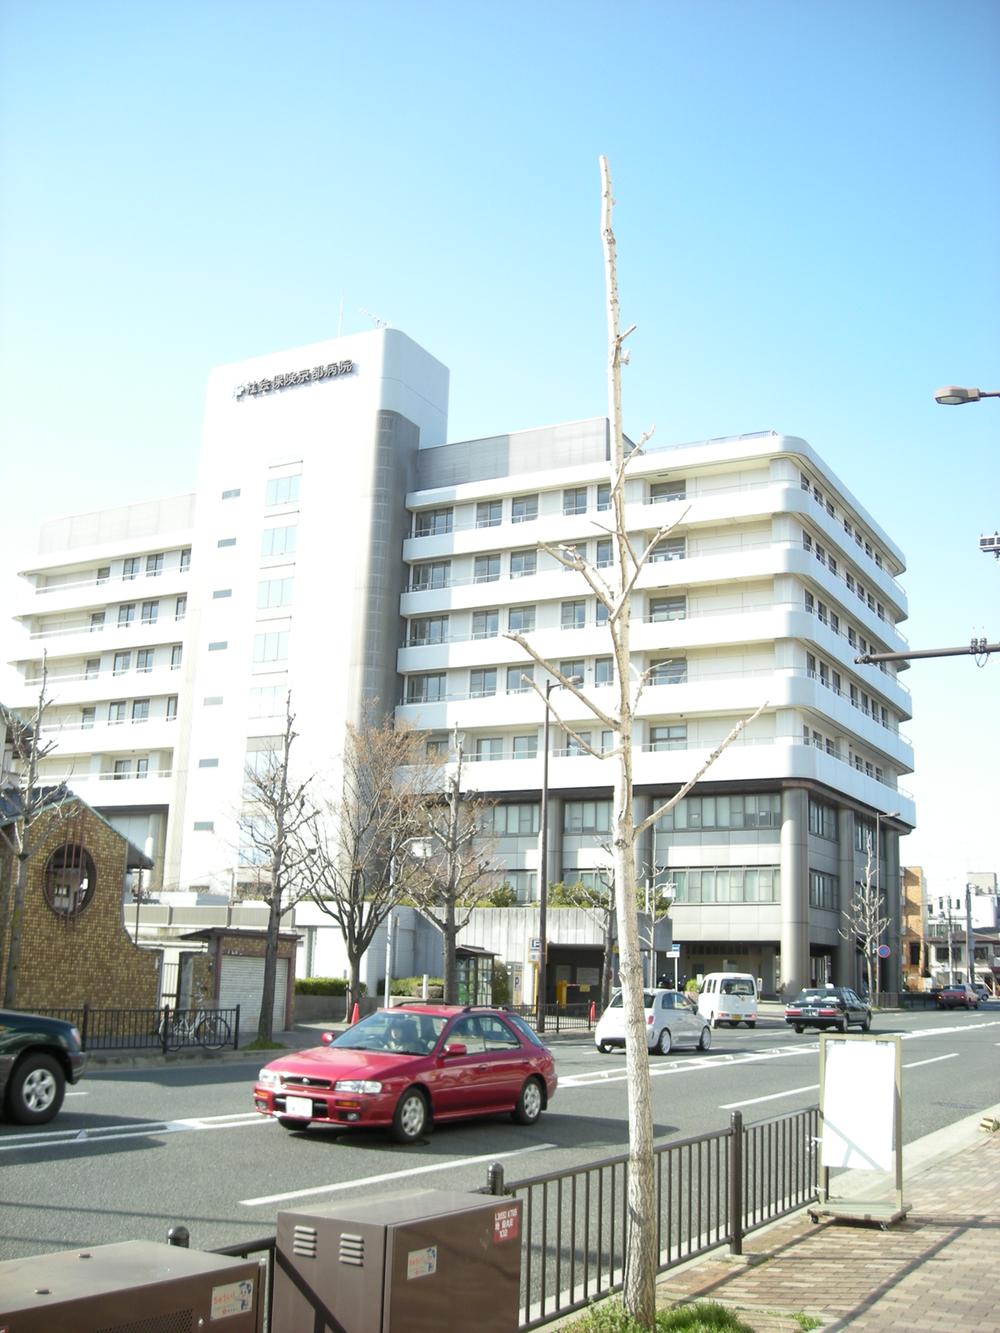 Hospital. 616m to social insurance Kyoto hospital